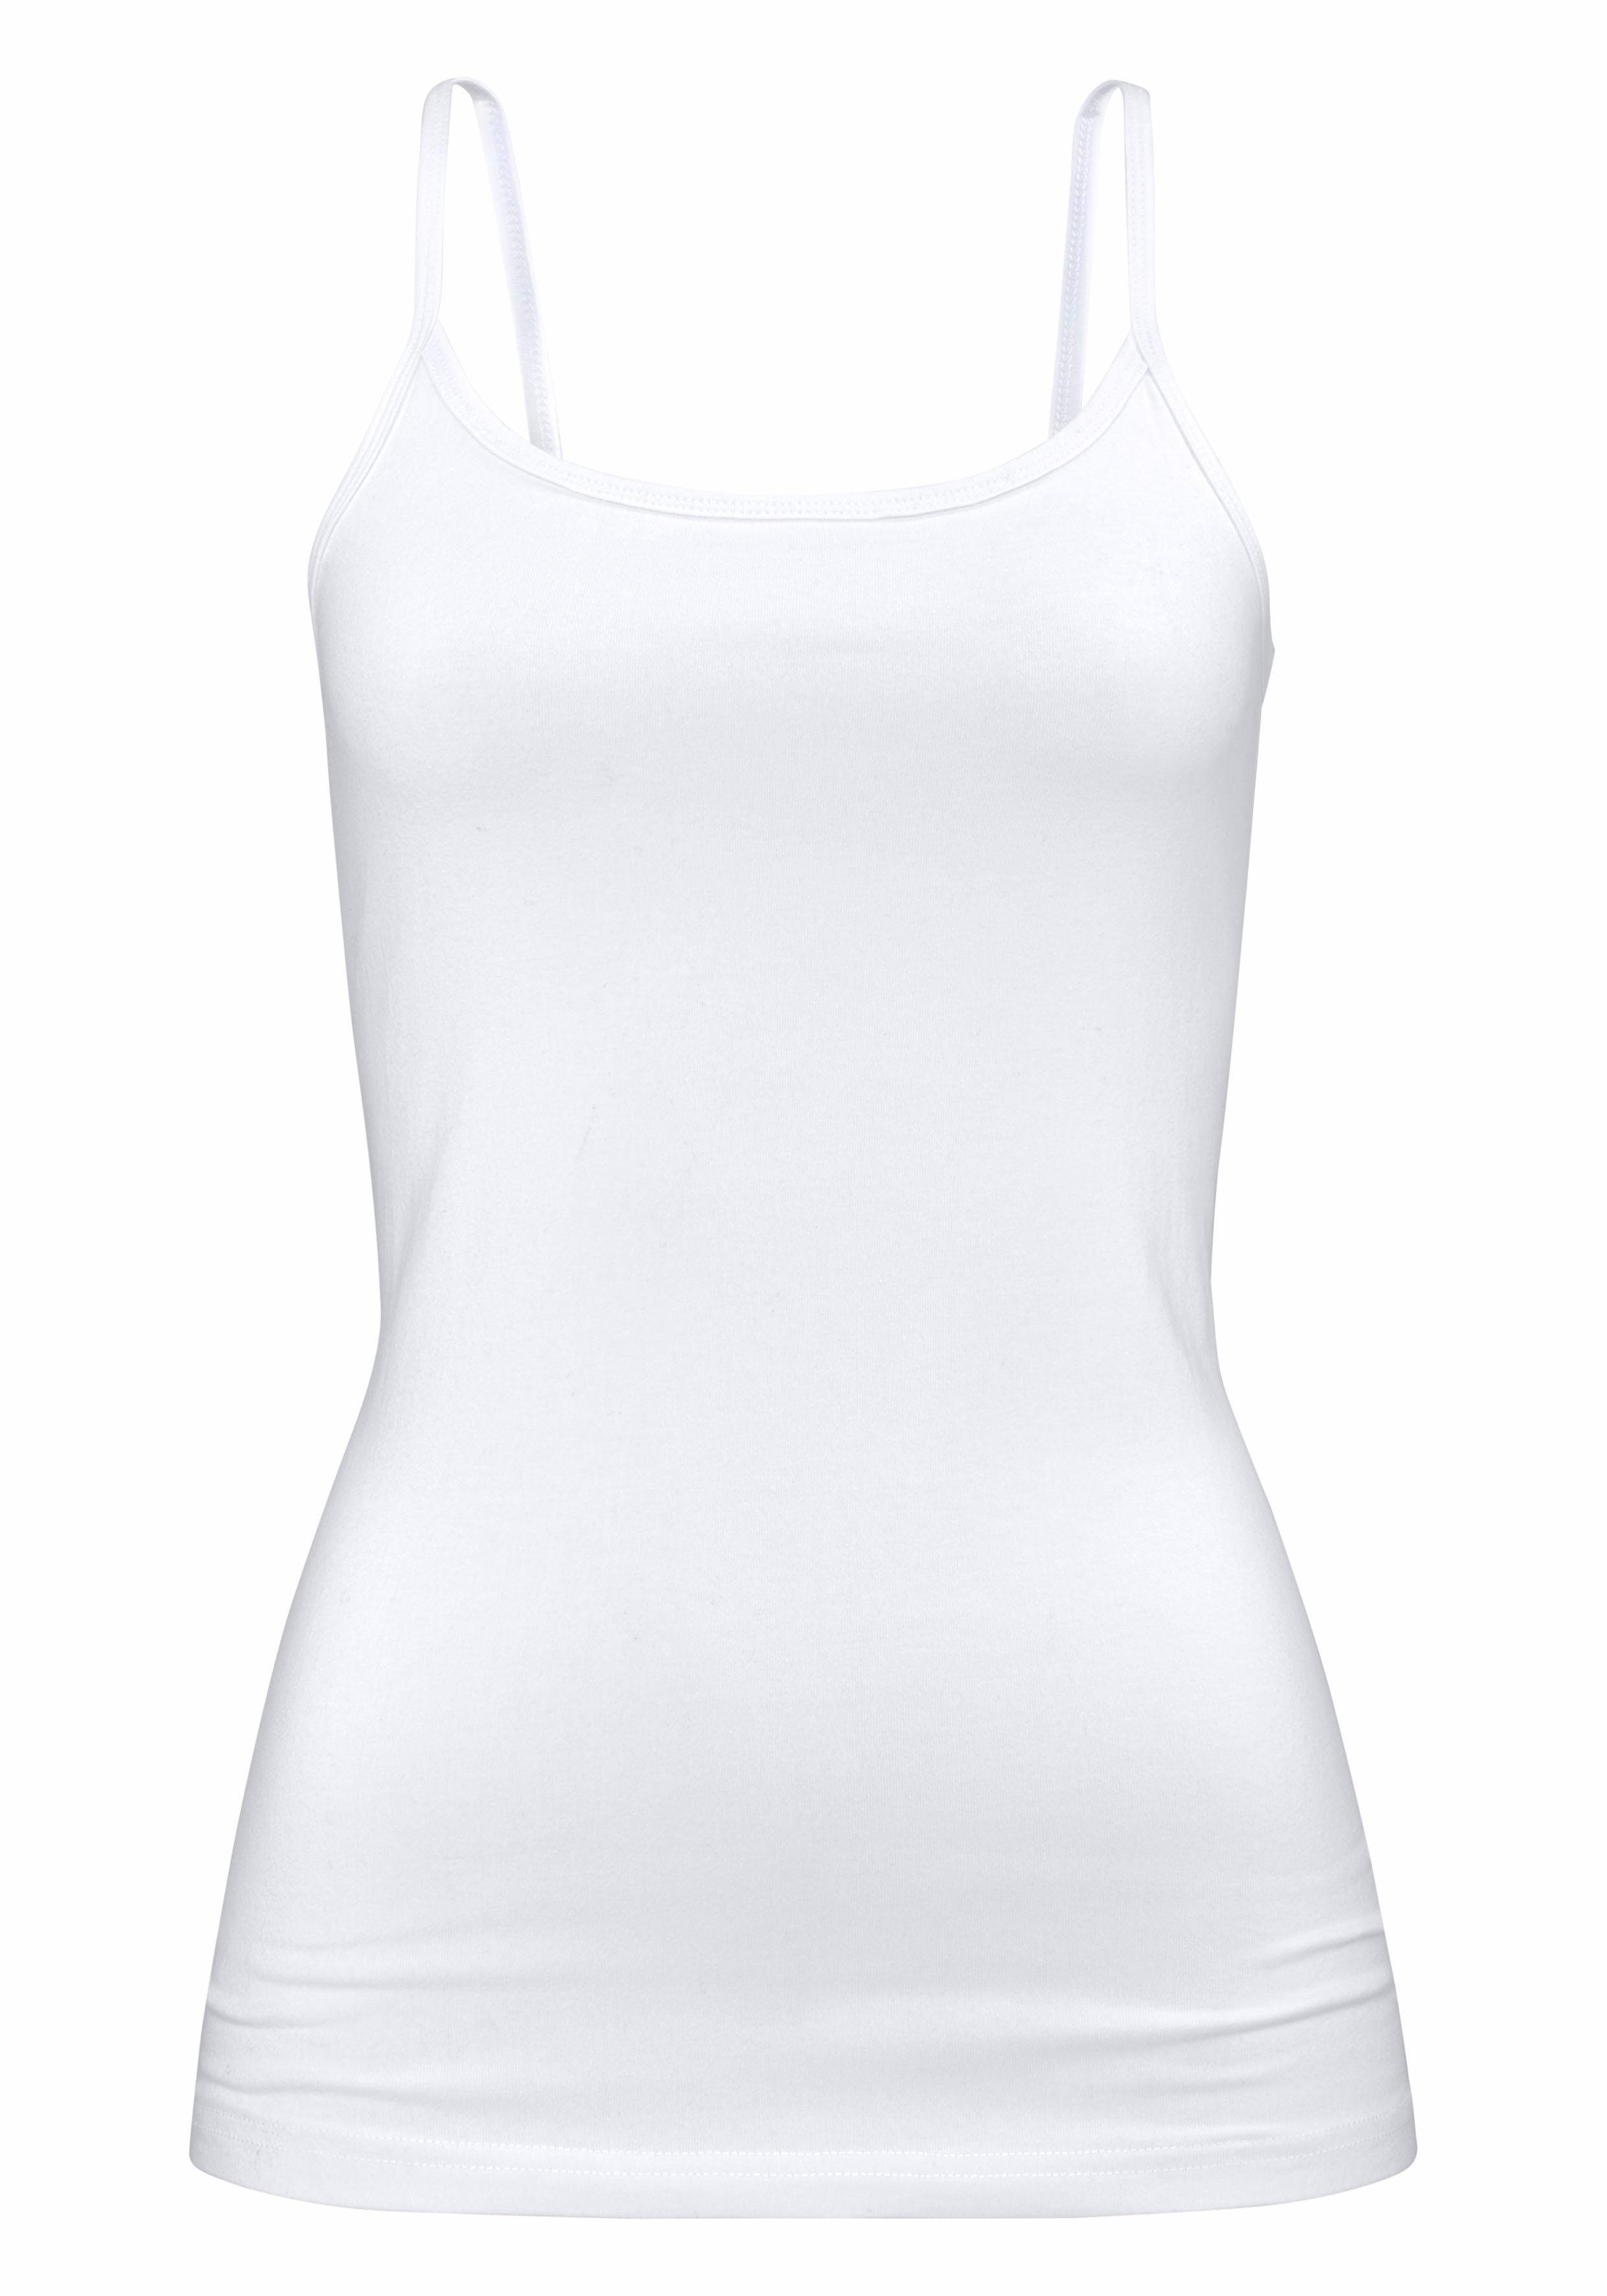 H.I.S Unterhemd (2er-Pack) Spaghettiträger-Top, Baumwoll-Qualität, Unterziehshirt elastischer weiß aus